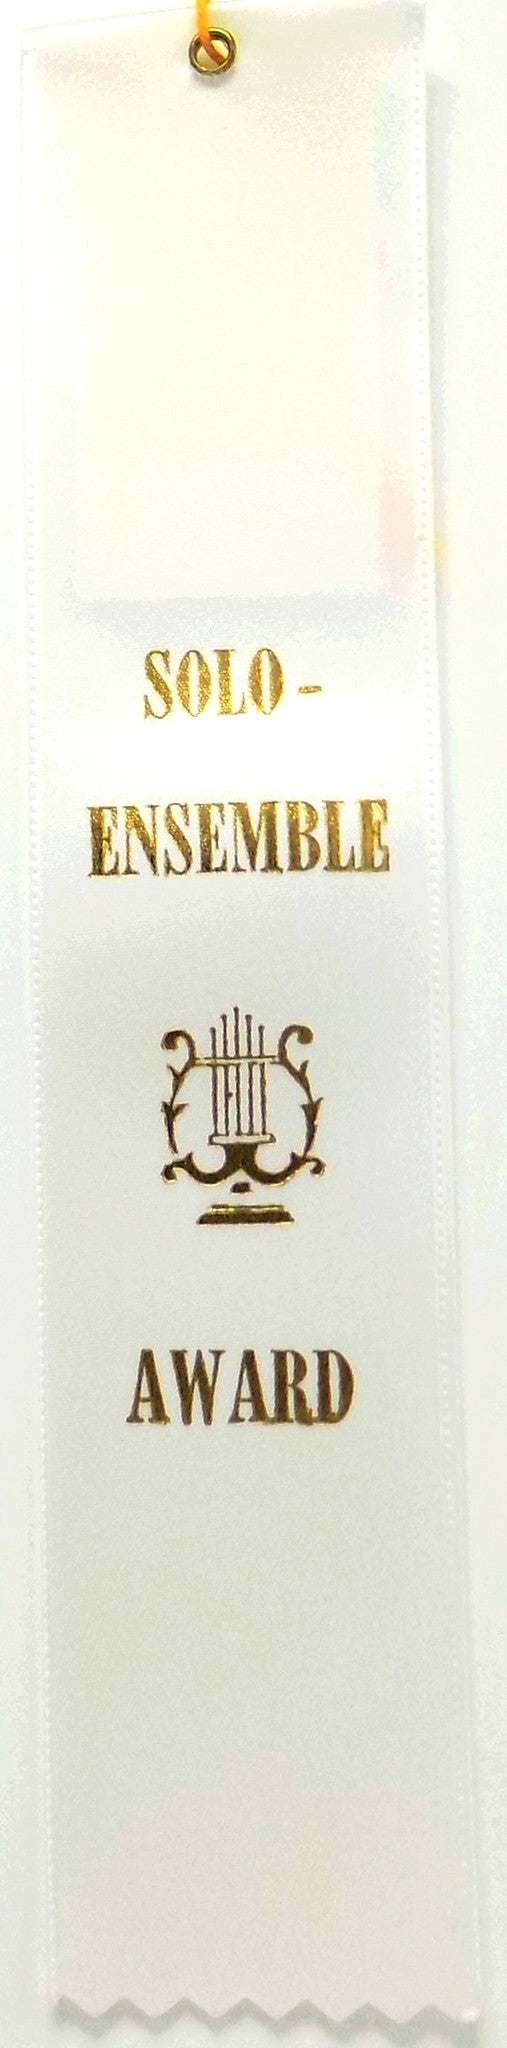 Solo-Ensemble Stock Award Ribbons